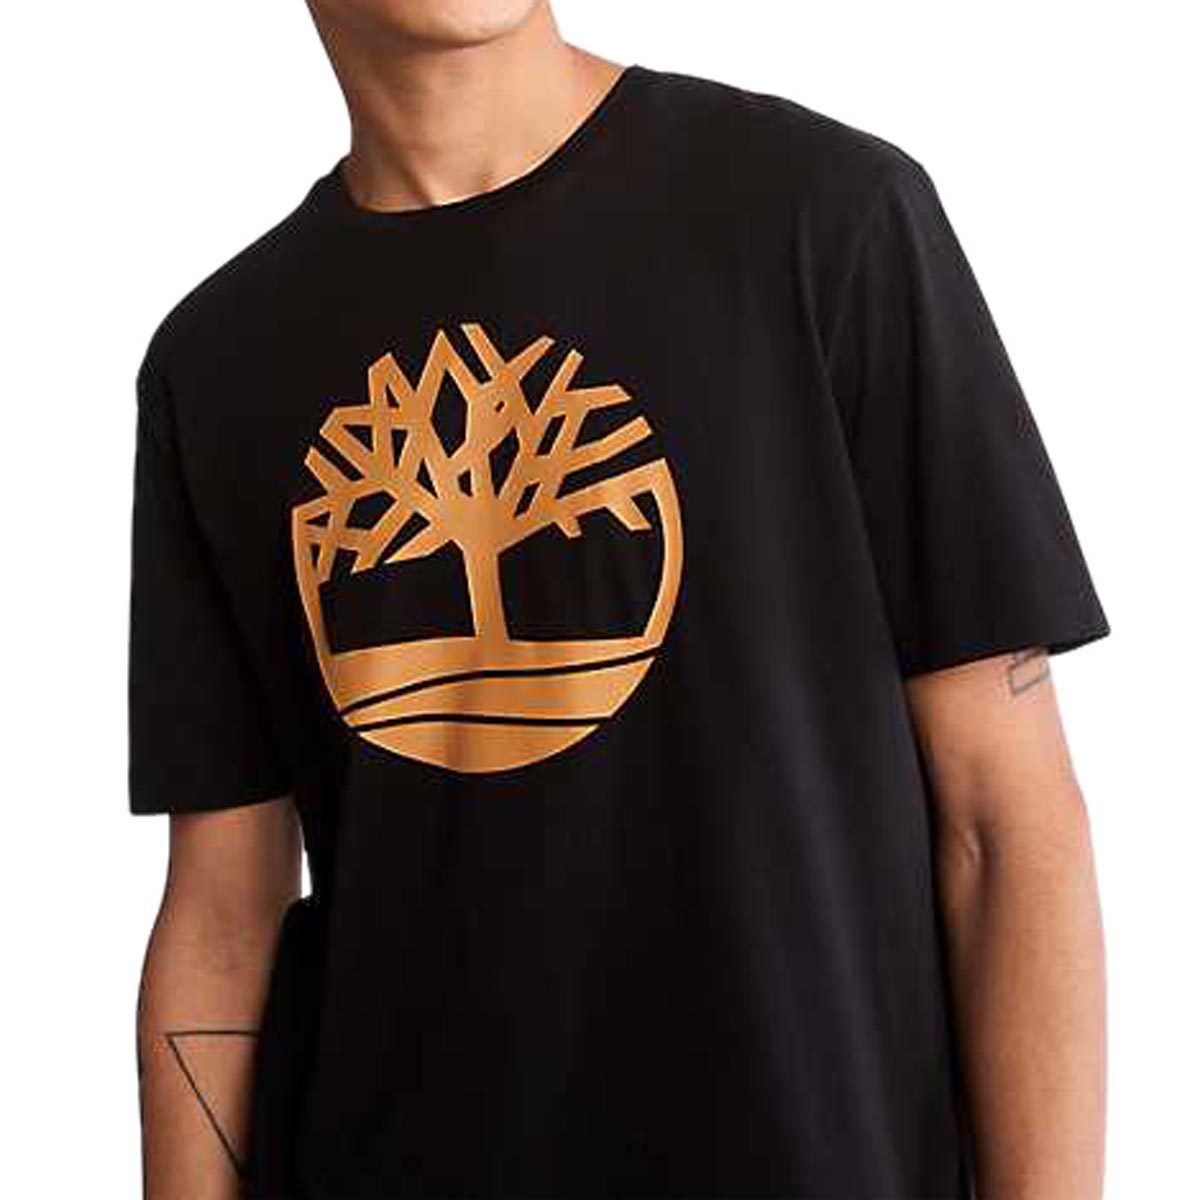 Timberland Kennebec Tree Logo T-Shirt - Black/Wheat Boot image 2